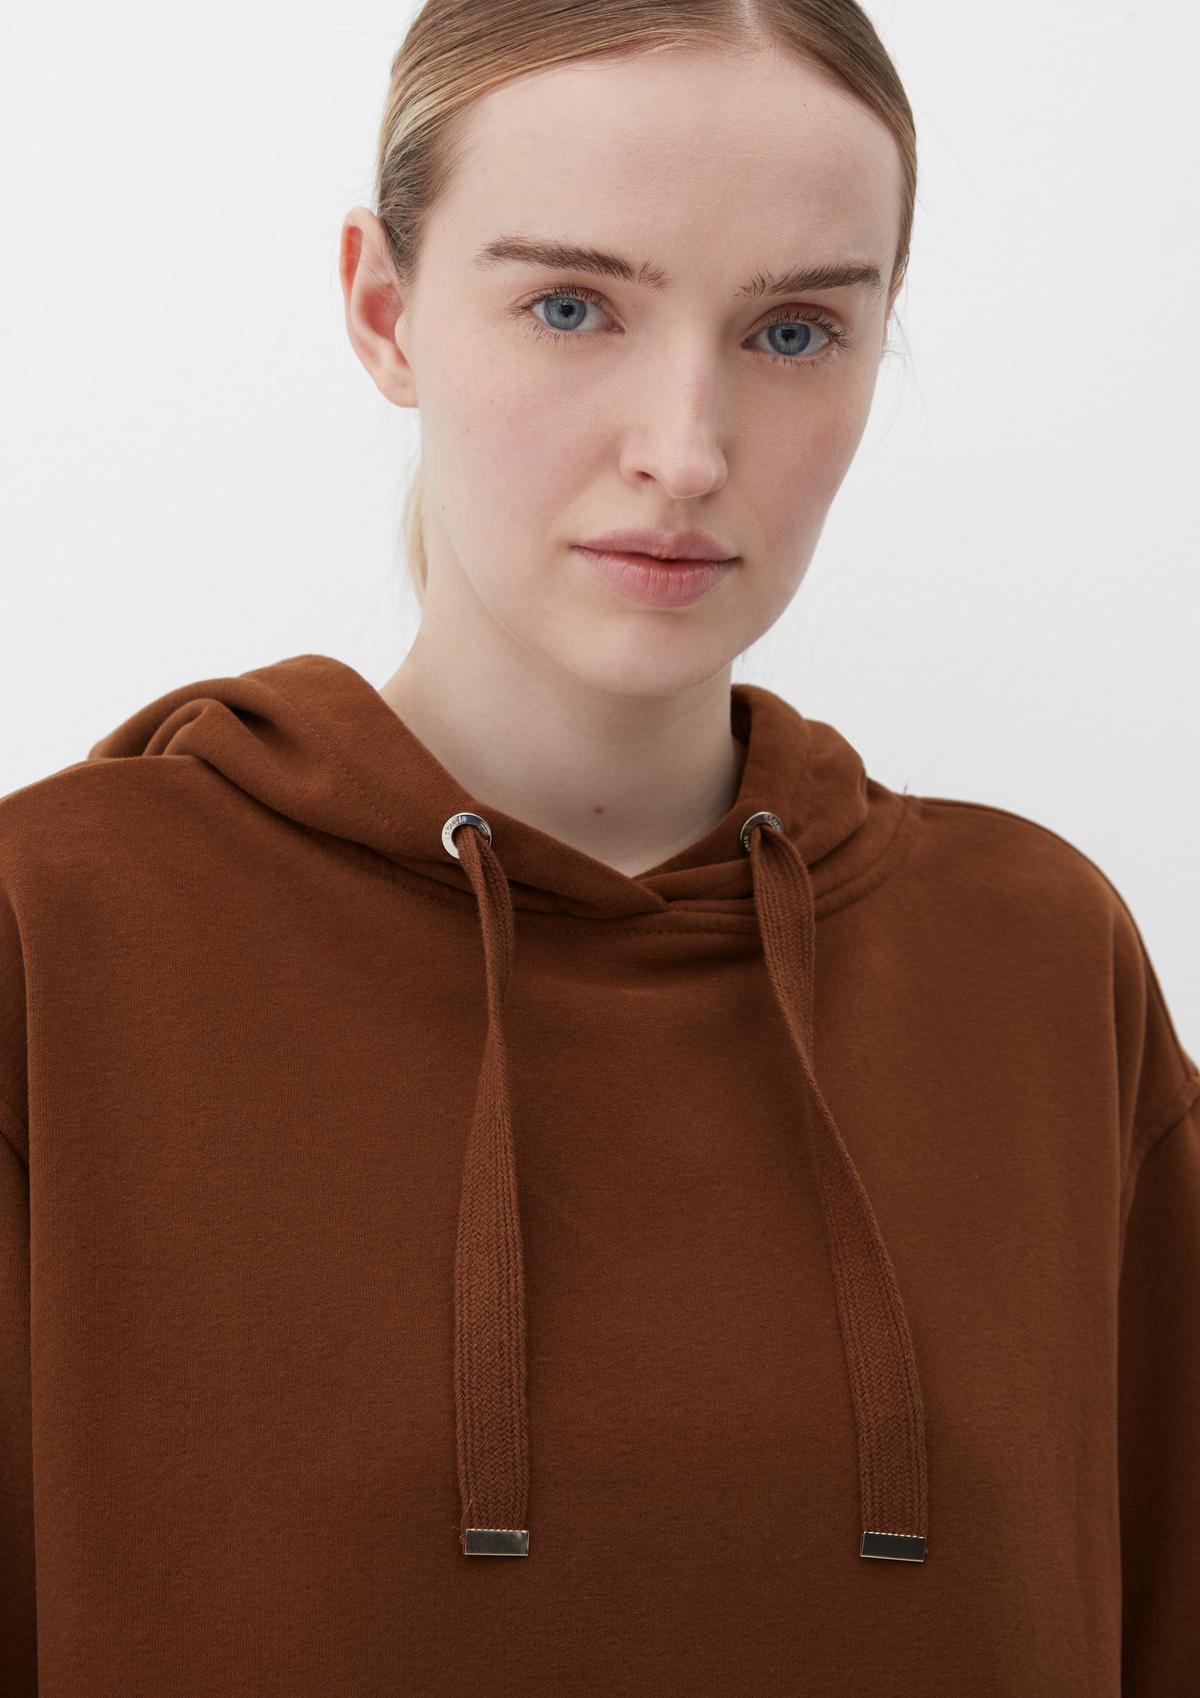 s.Oliver Sweatshirt dress with a hood